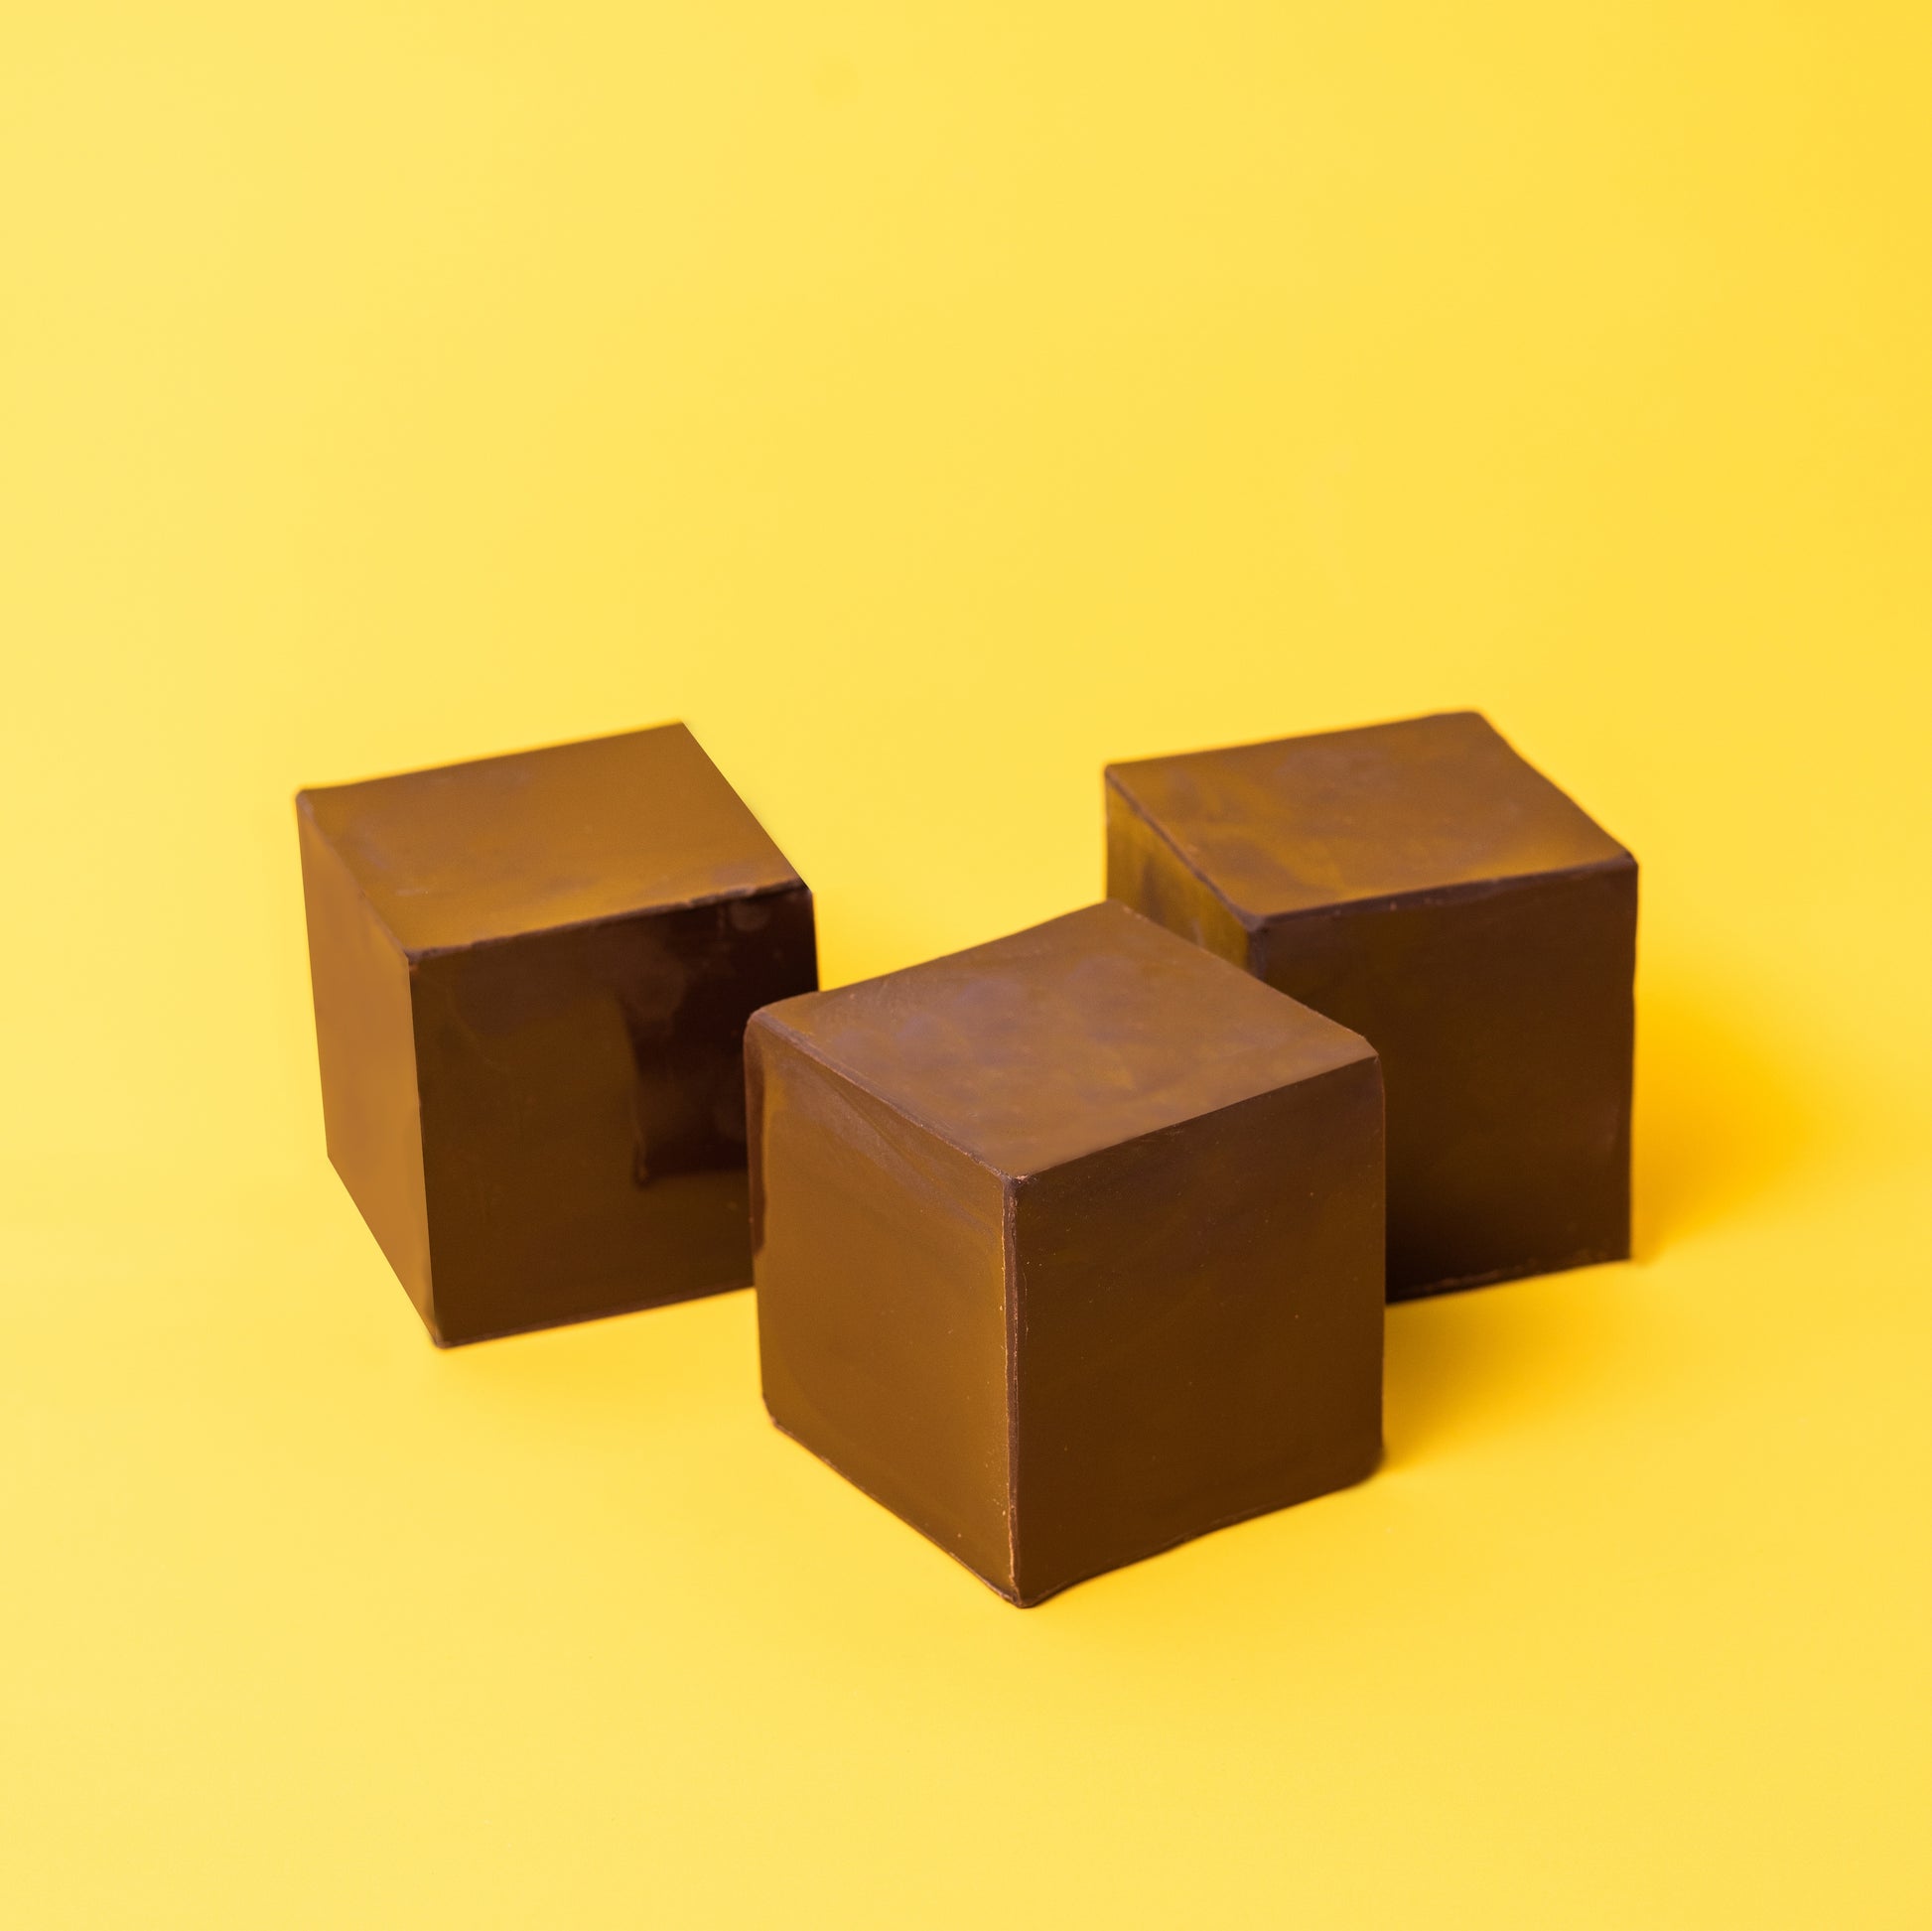 American Crafts Kaboom Brown Chocolate Pinata Heart Mold Kit 